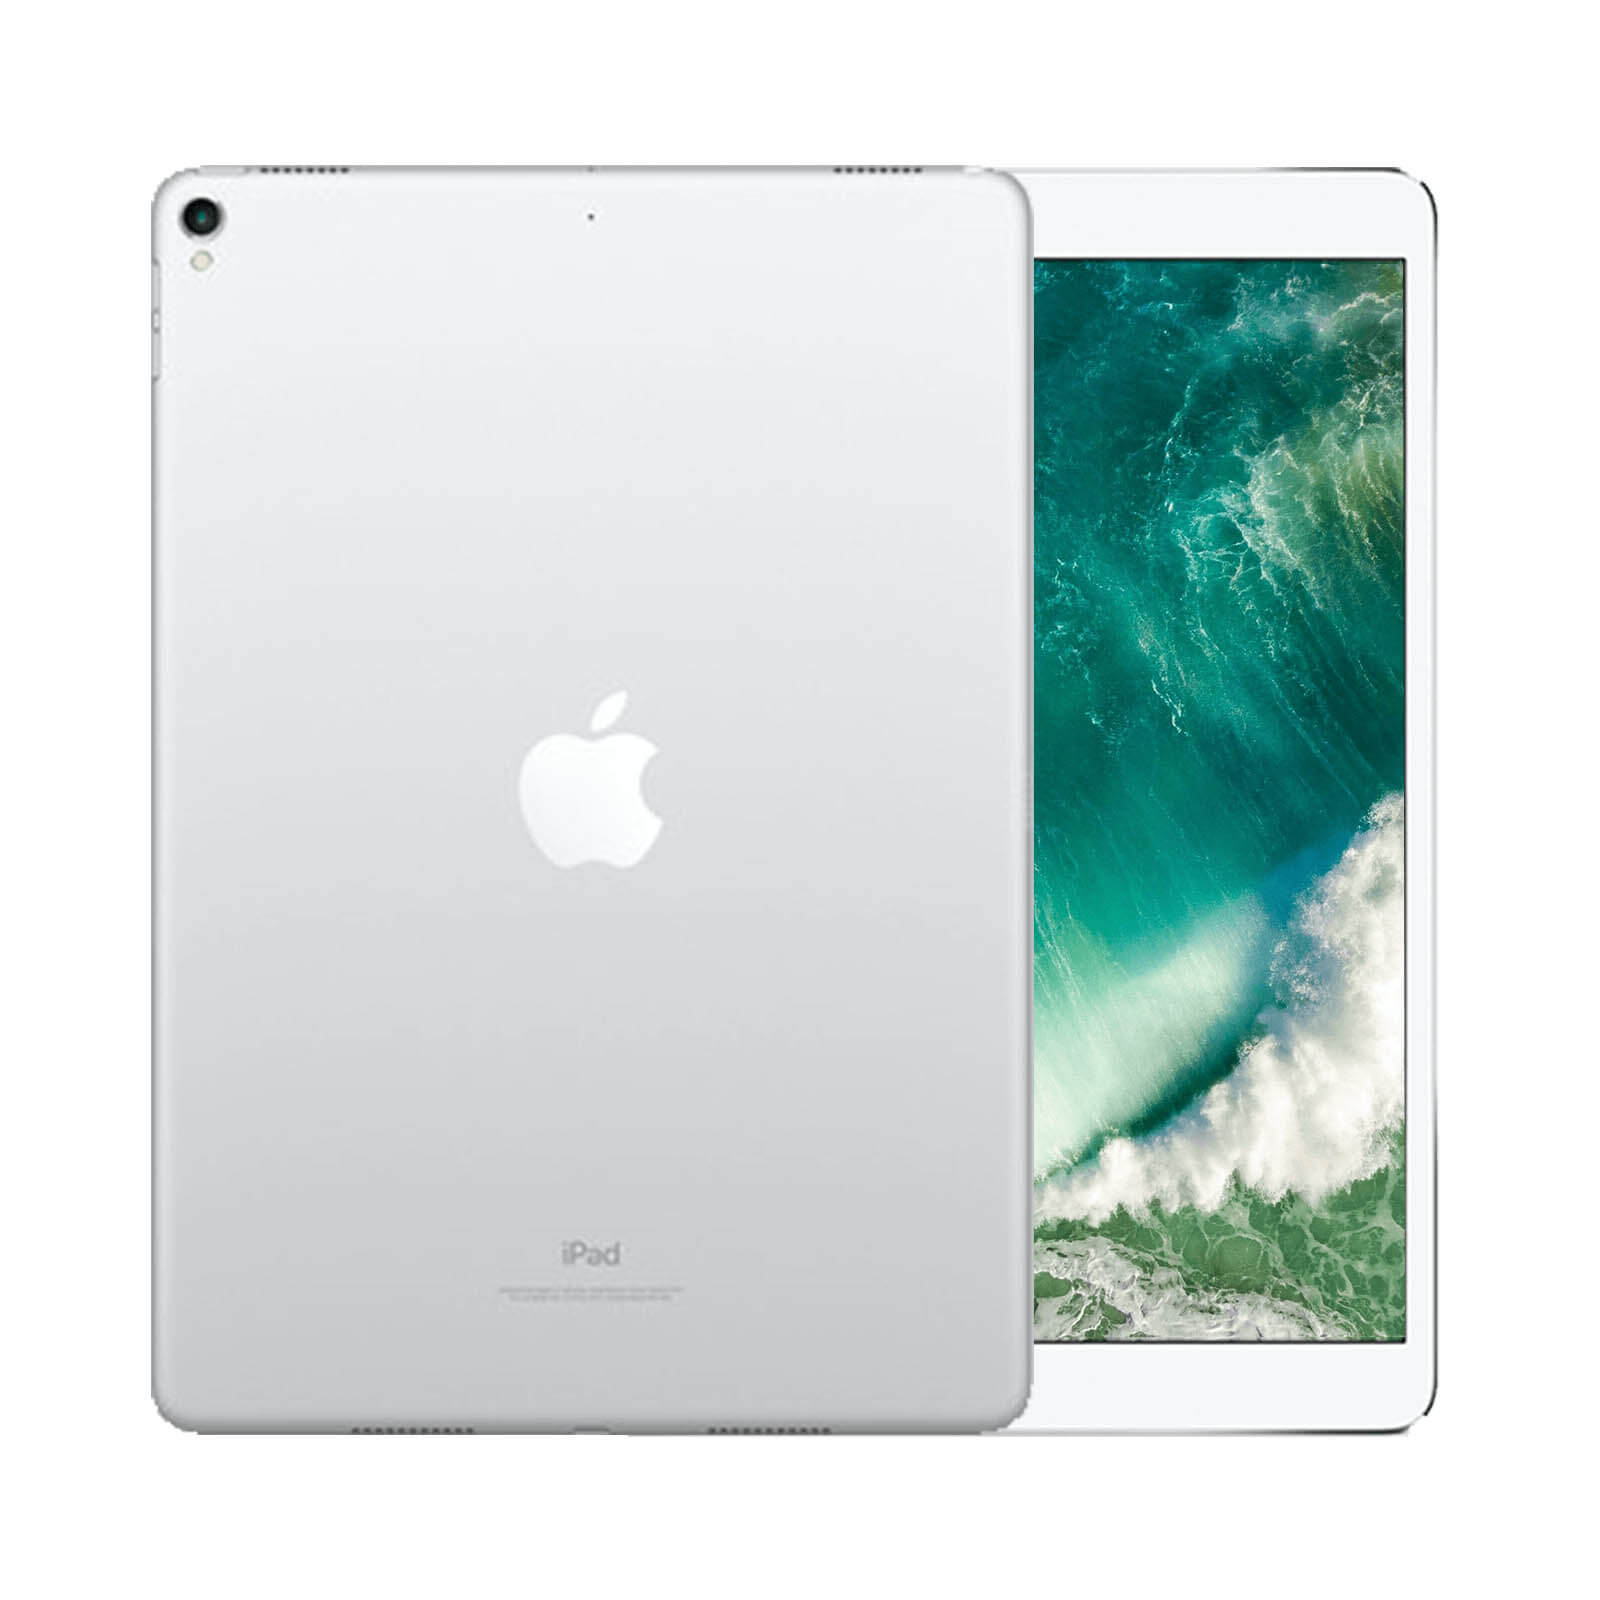 iPad Pro 11 Inch 256GB Space Grey Pristine - Unlocked 256GB Space Grey Pristine